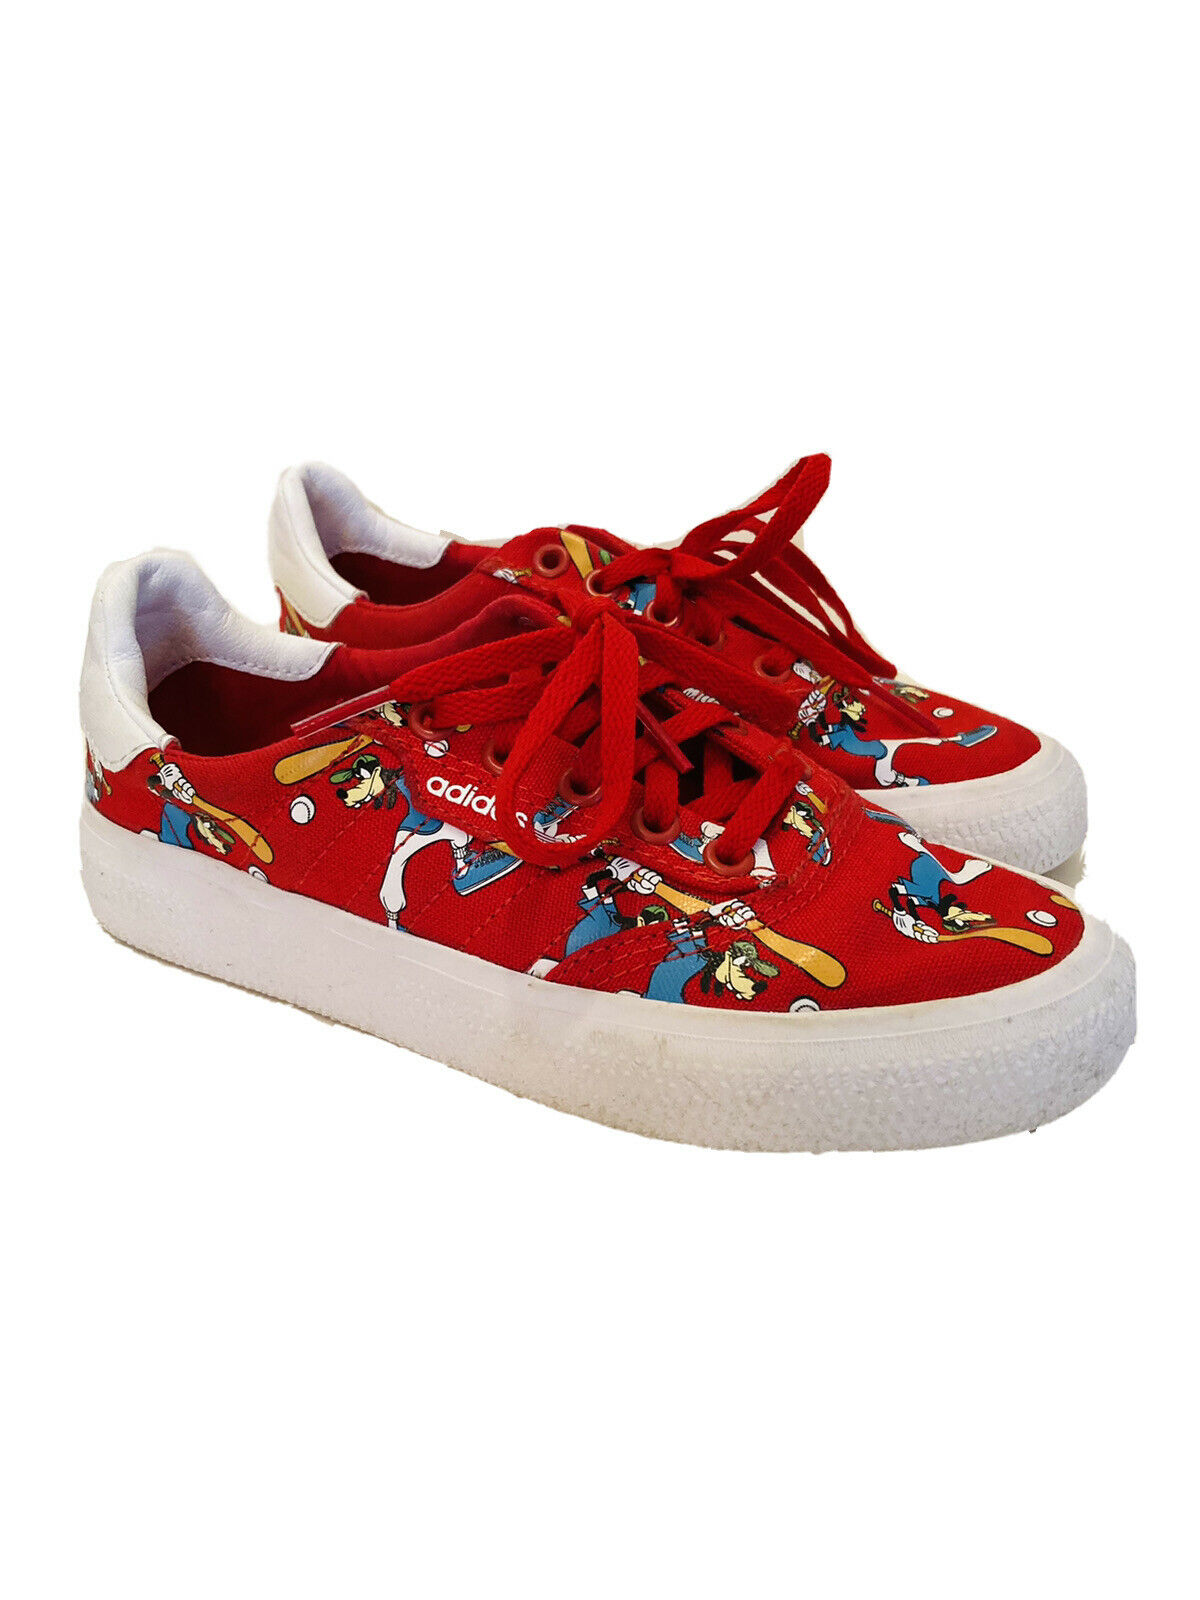 Adidas Originals 3MC Disney Sport Goofy Shoes Skate Sneakers Youth 3.5 Women’s 5